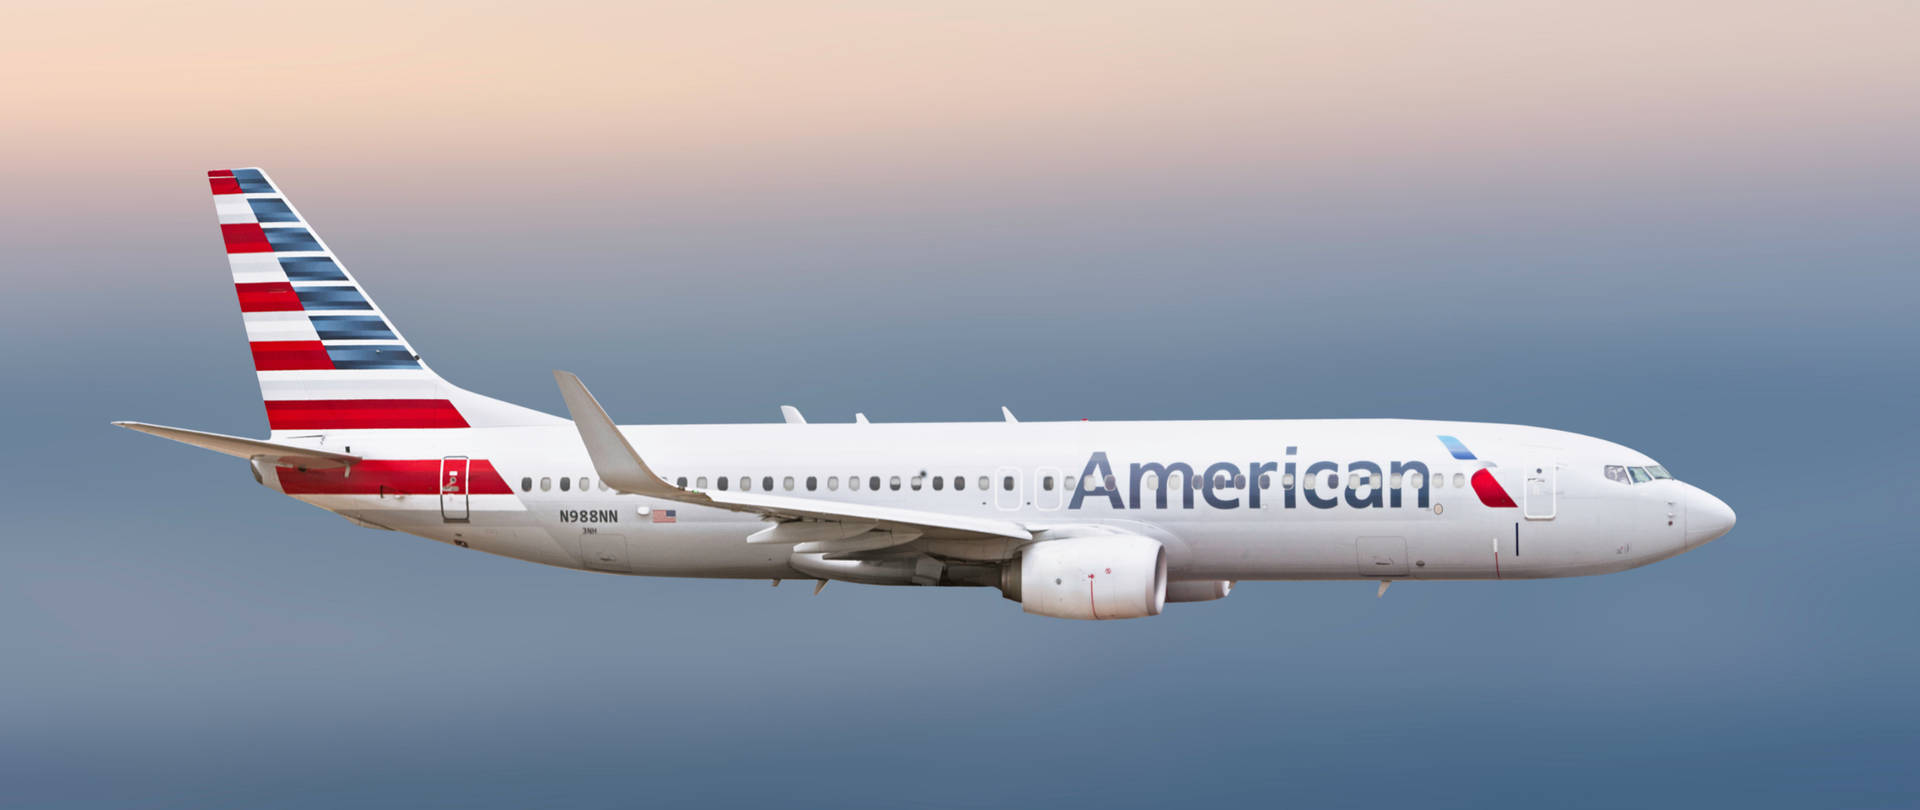 American Airlines Wallpaper